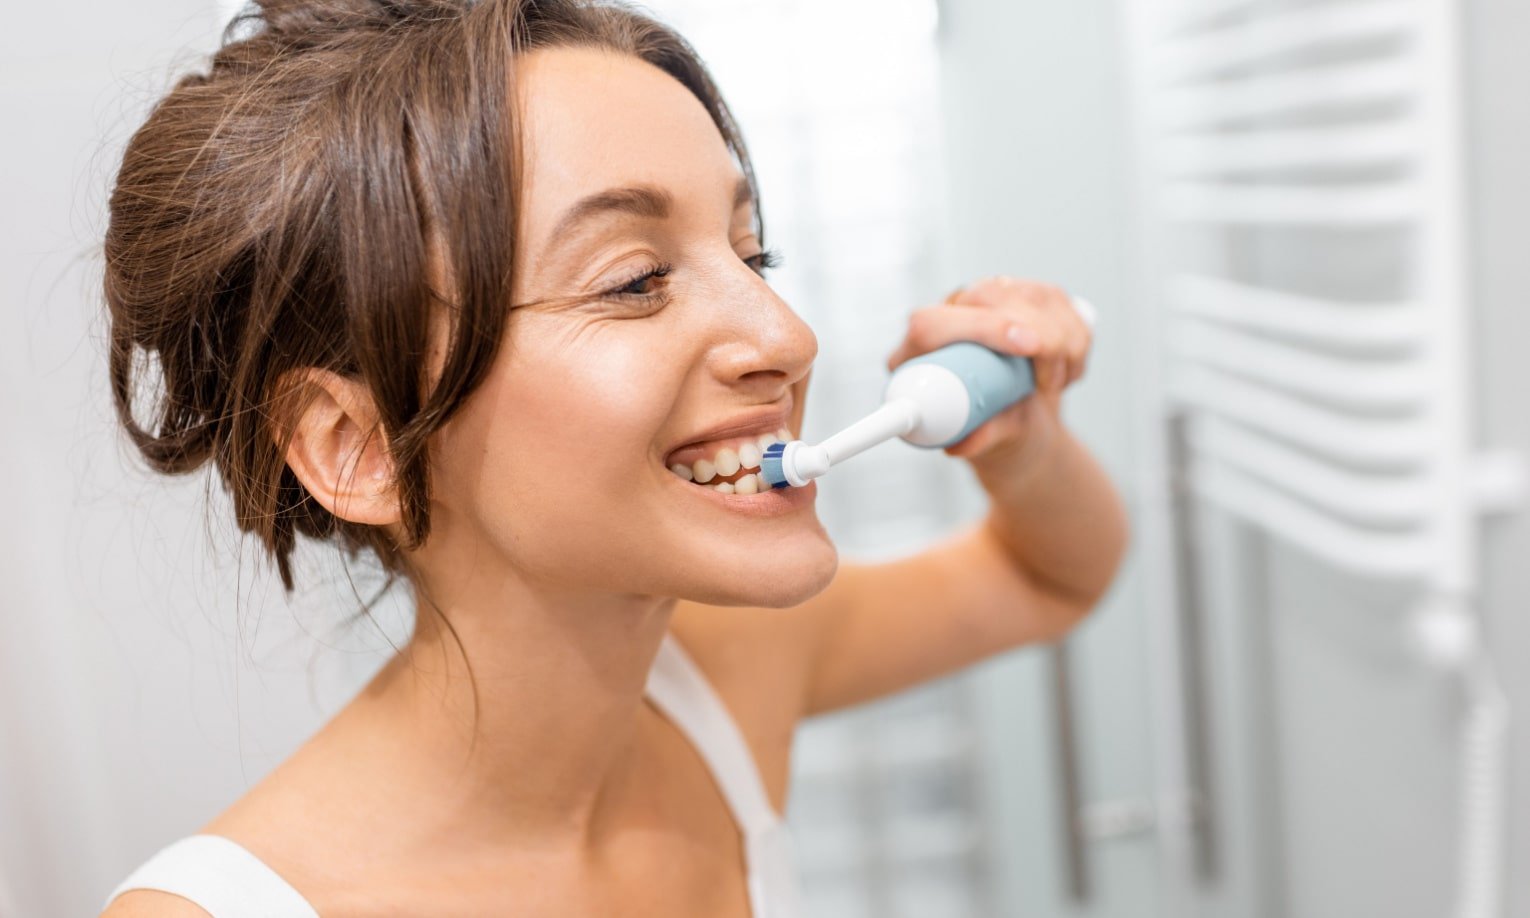 naine peseb elektrilise hambaharjaga hambaid